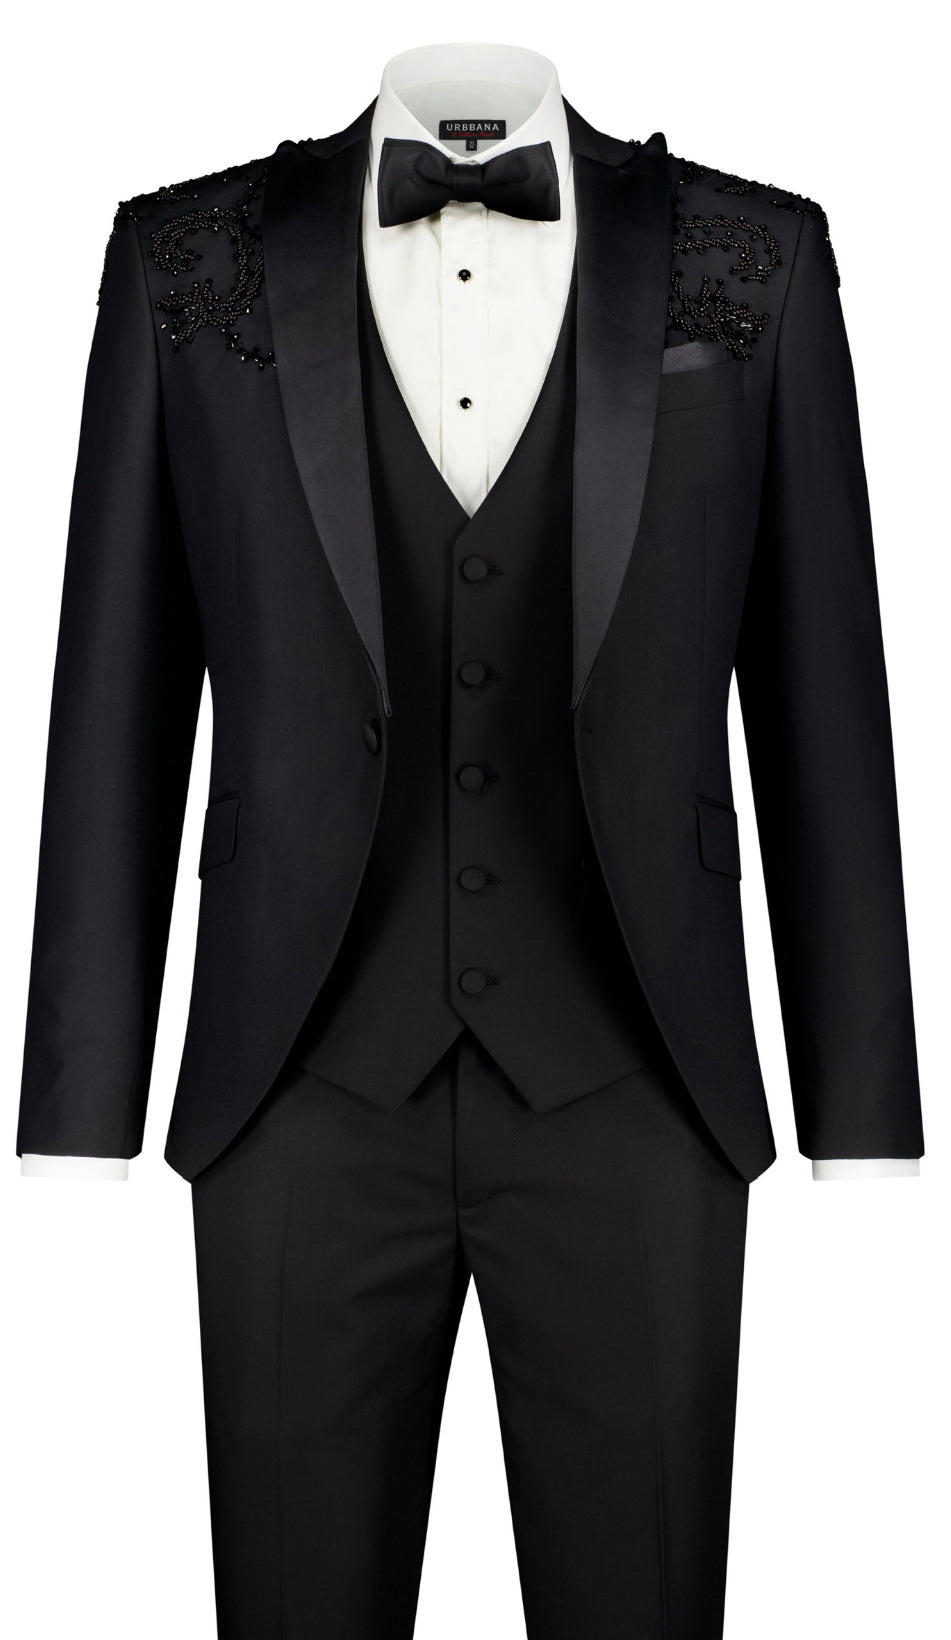 The Falconi Ceremony Suit - Suit by Urbbana